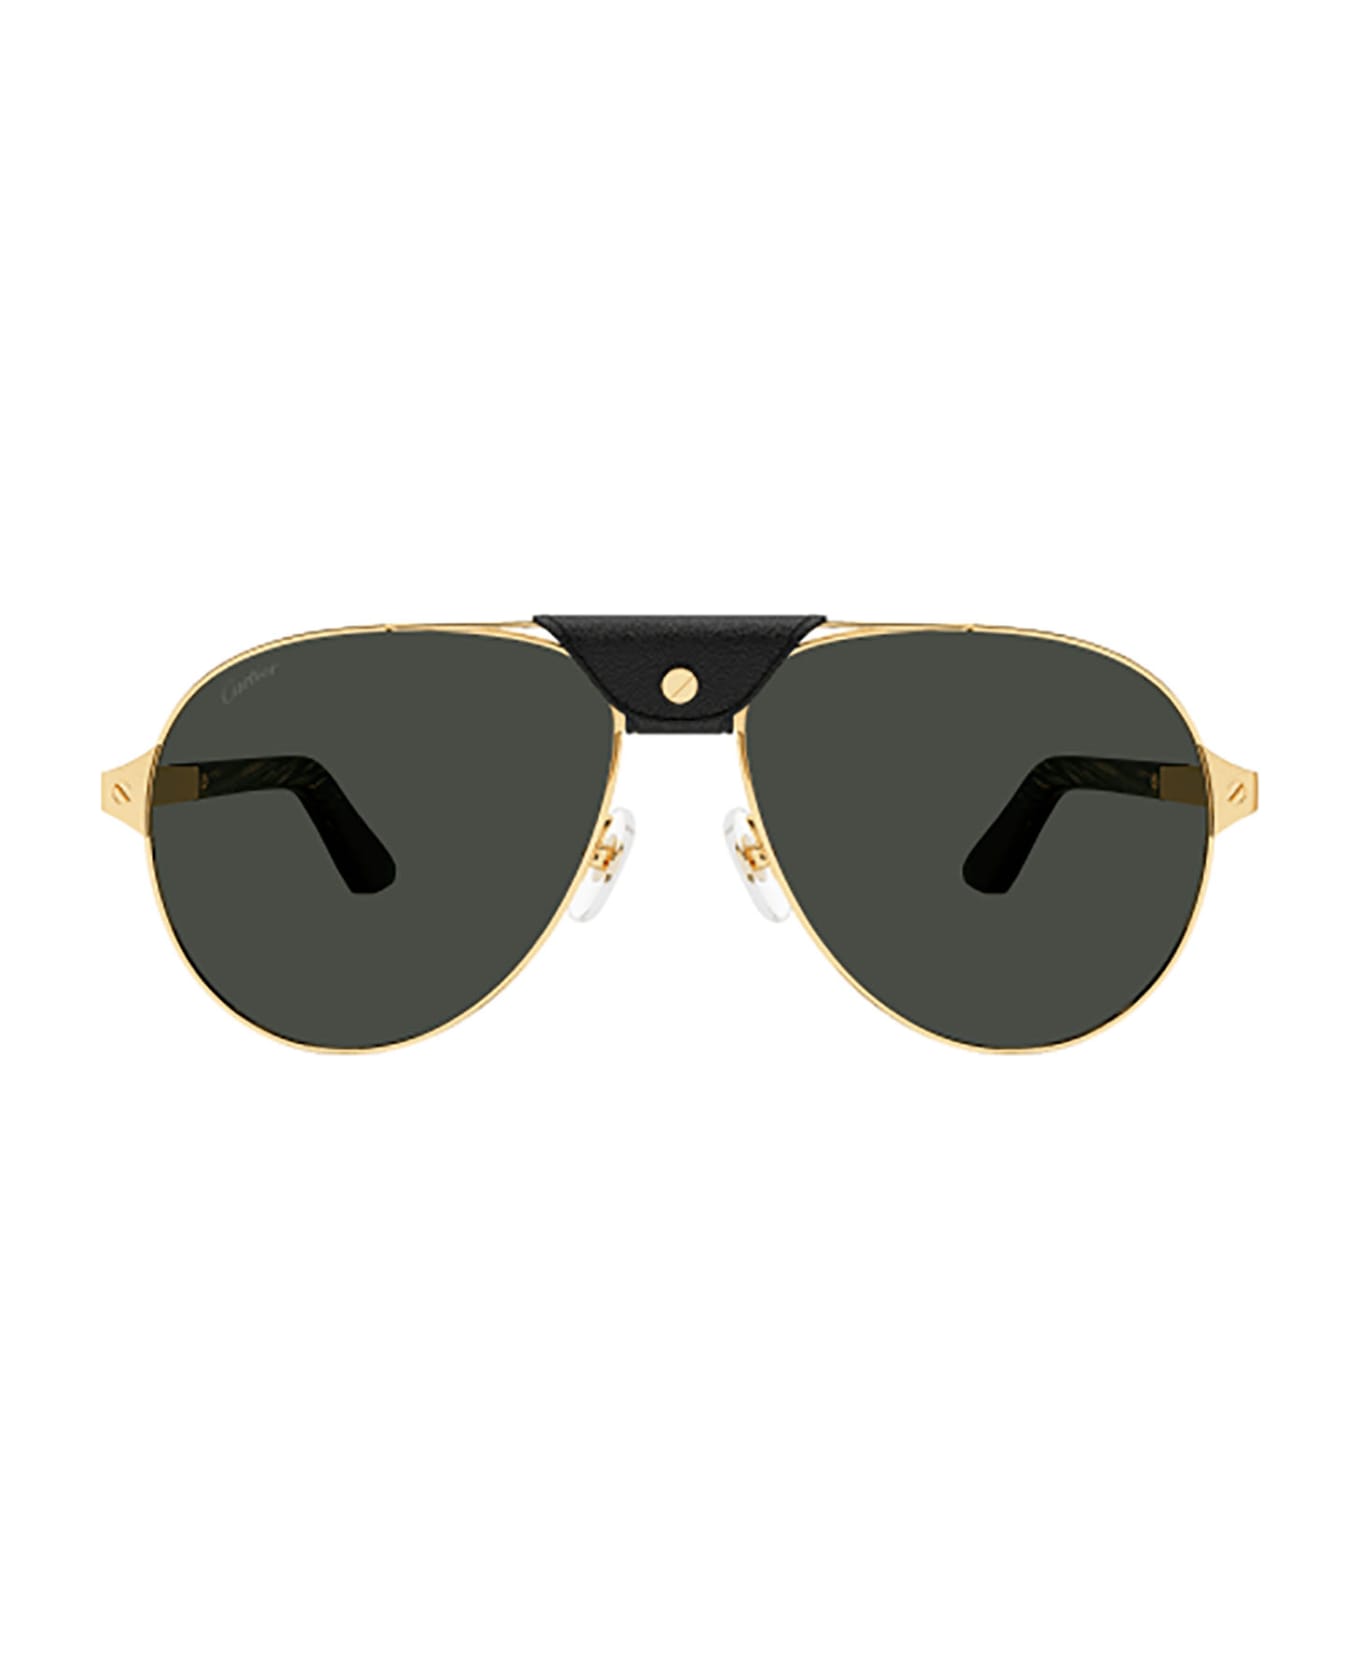 Cartier Eyewear Ct0387s Sunglasses - 001 GOLD GOLD GREY